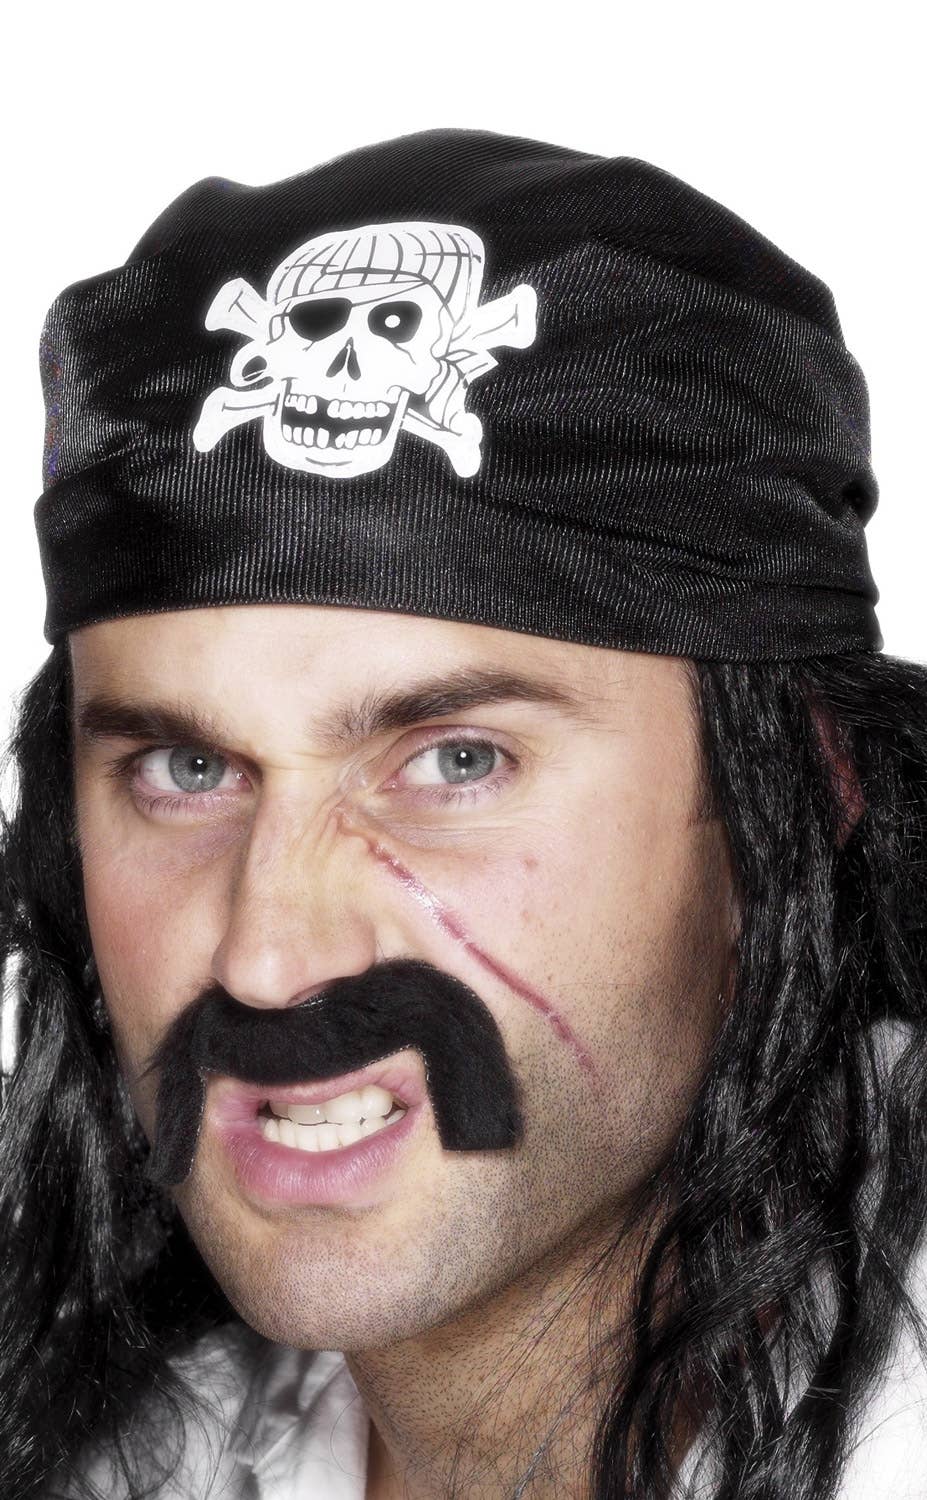 Black Pirate Unisex Skull And Crossbones Bandanna Costume Accessory Main Image